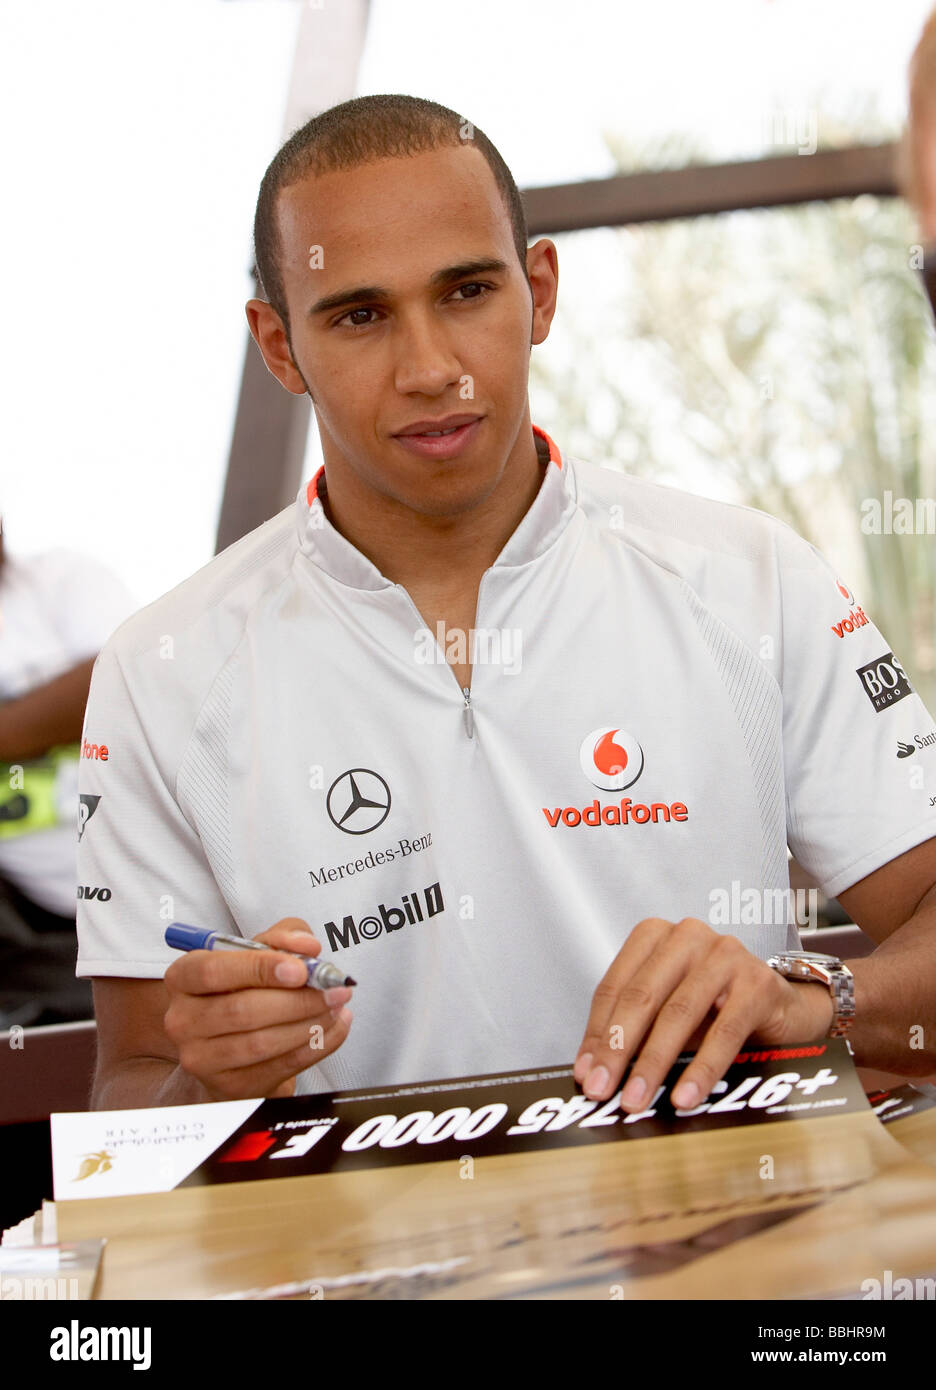 Lewis Hamilton Autogramme beim großen Preis von Bahrain 2009 Stockfoto